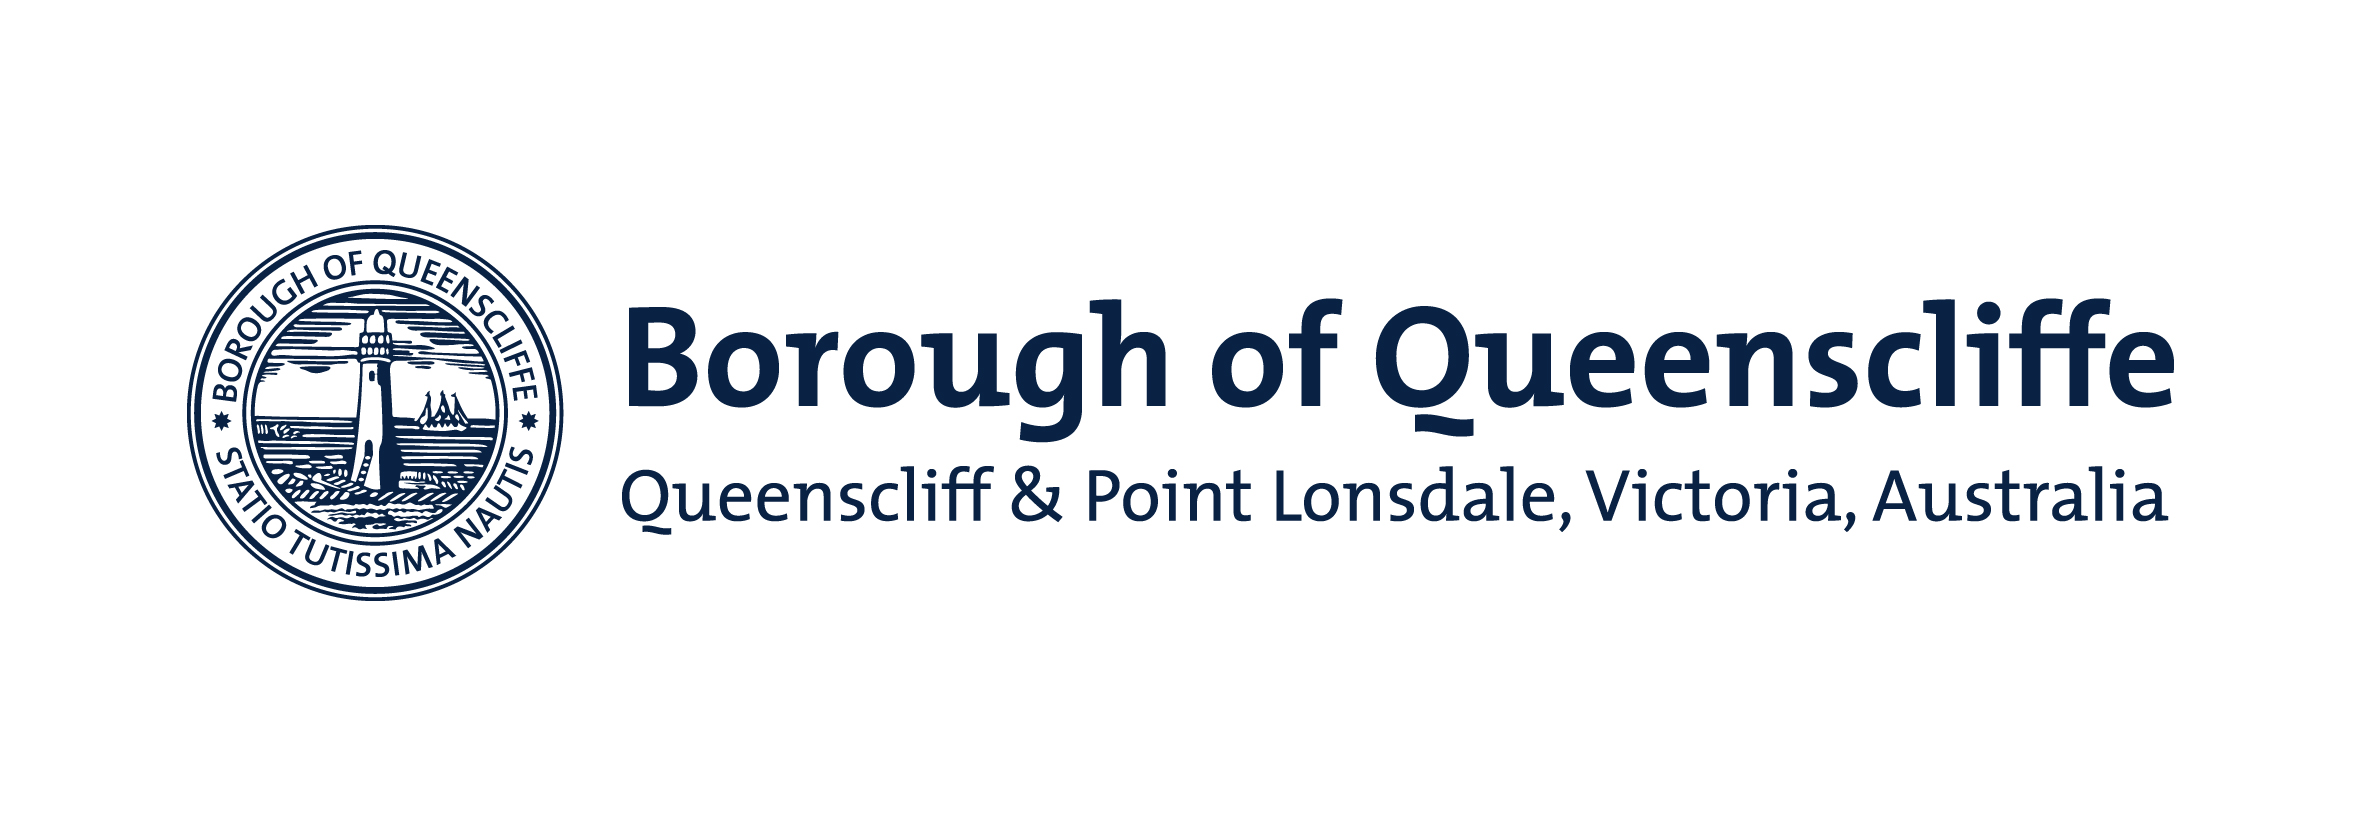 Borough of Queenscliffe logo